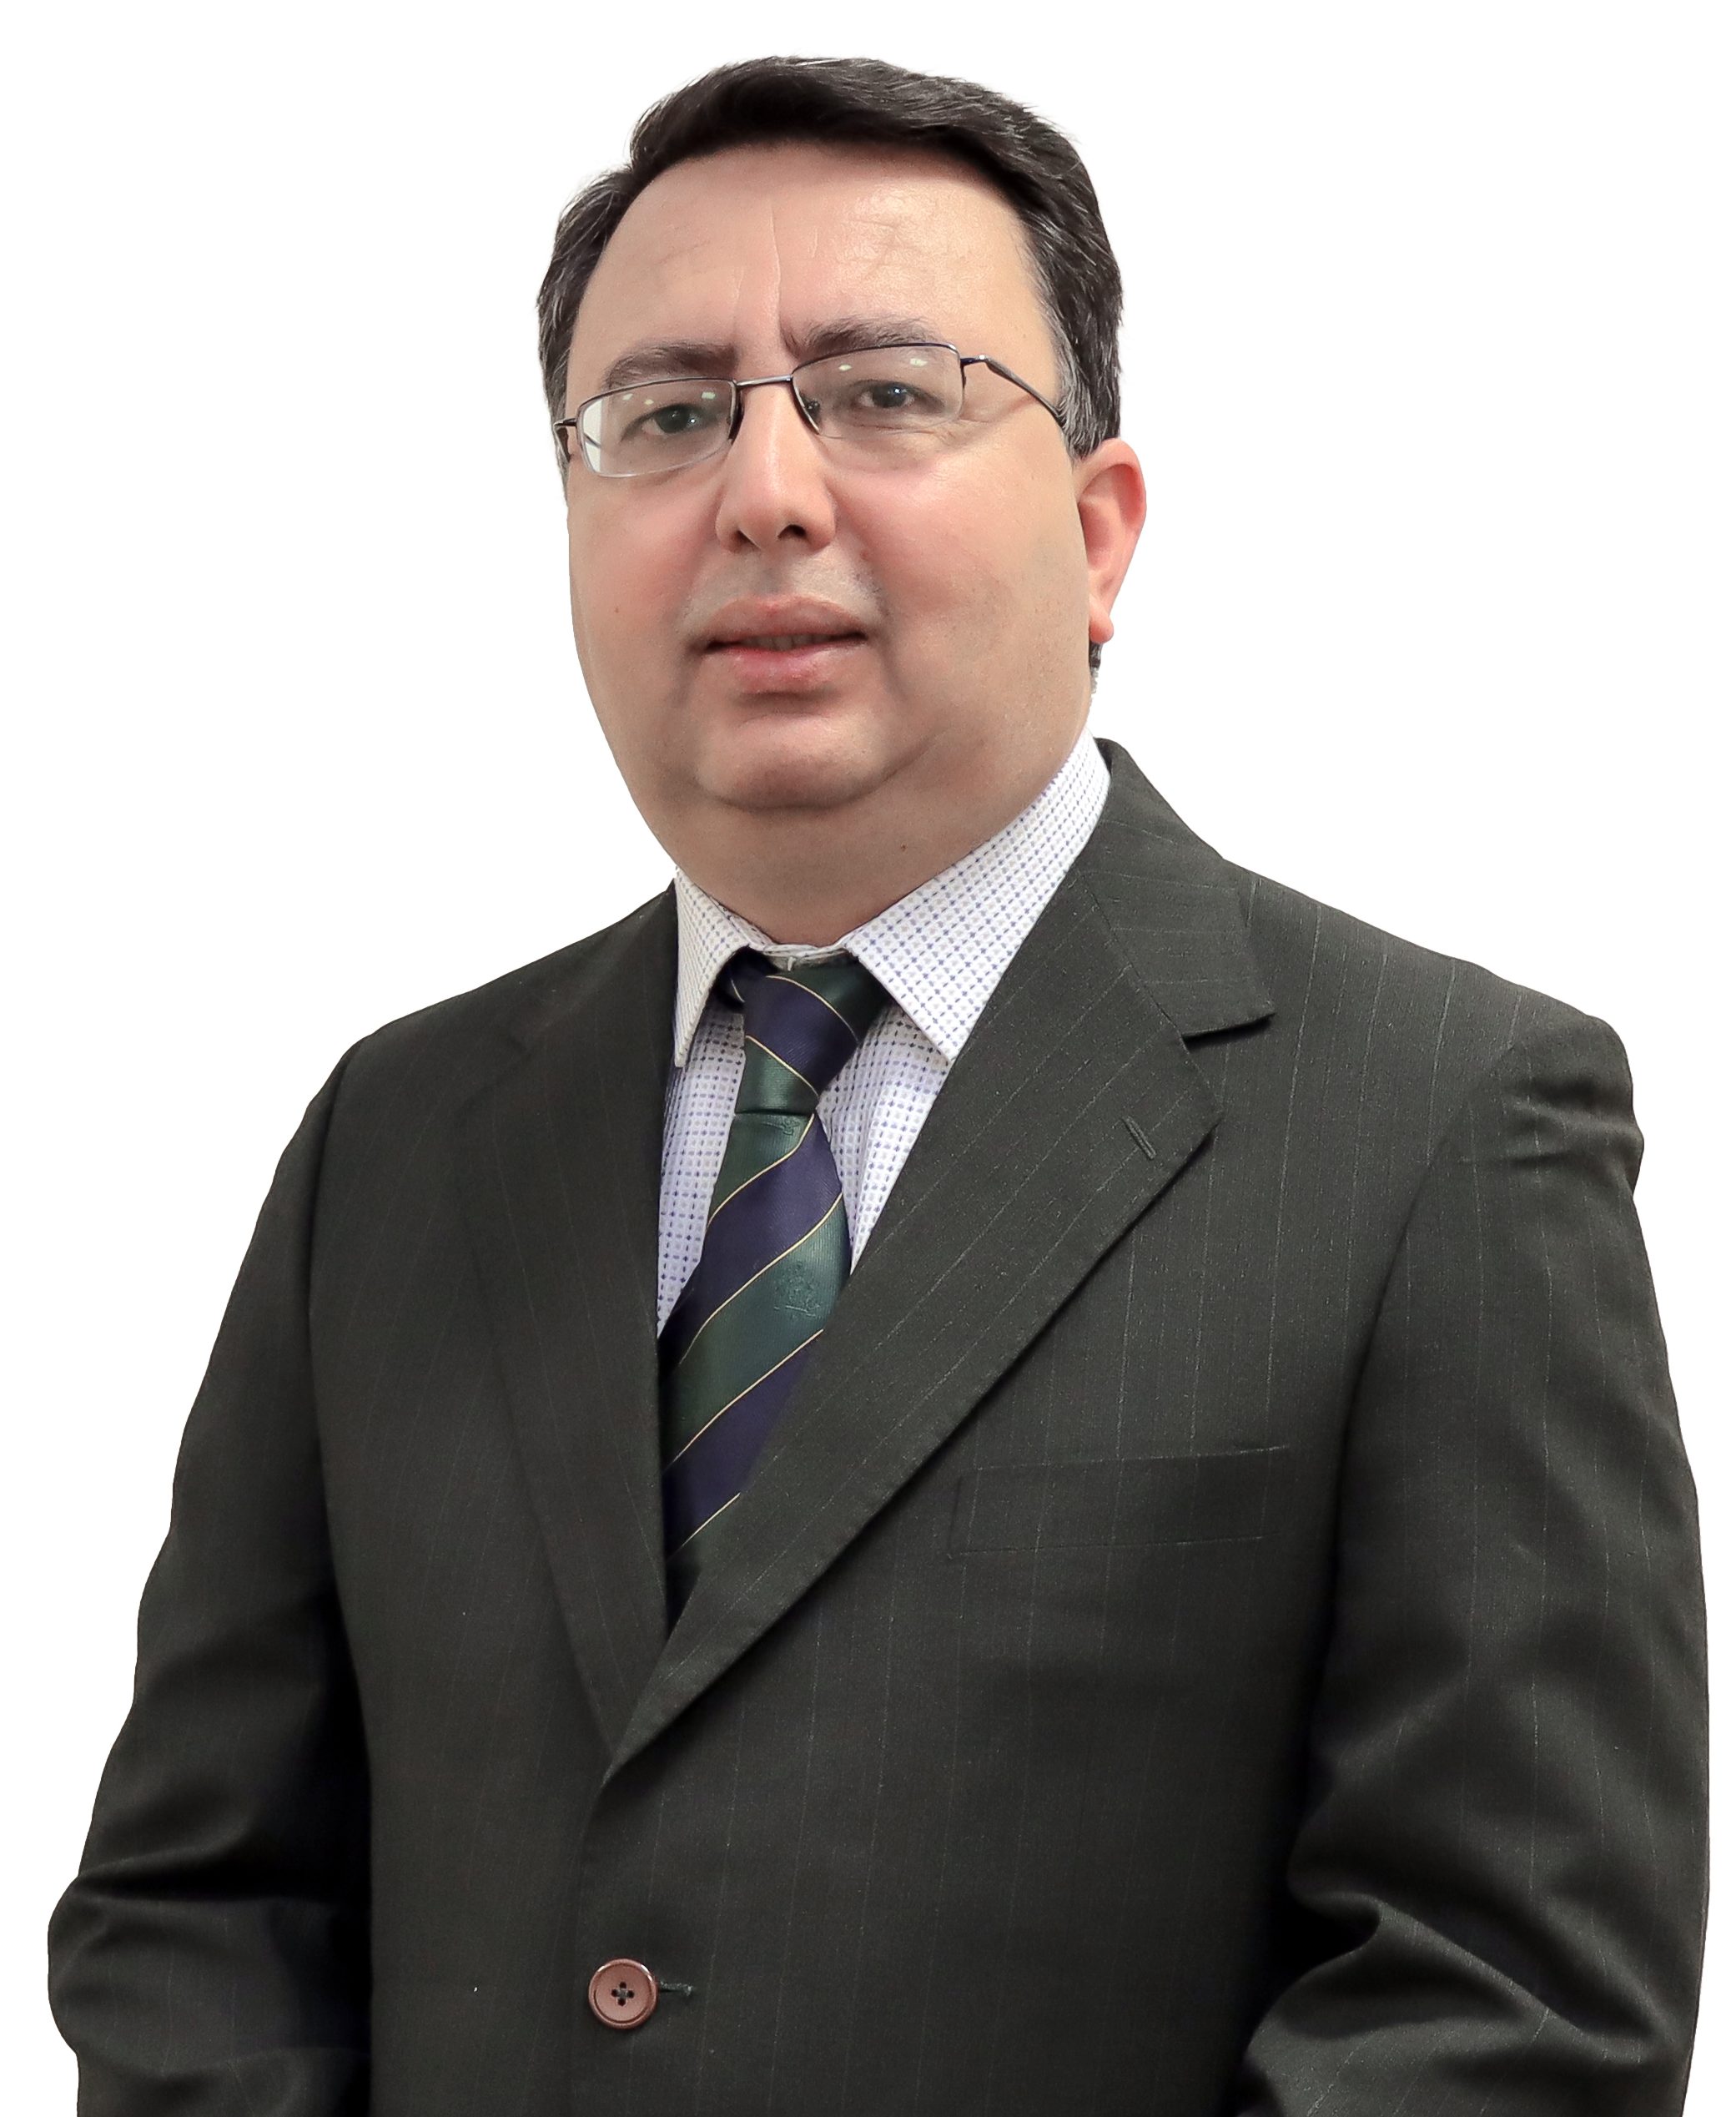 Dr. Khurram Saleem Khan